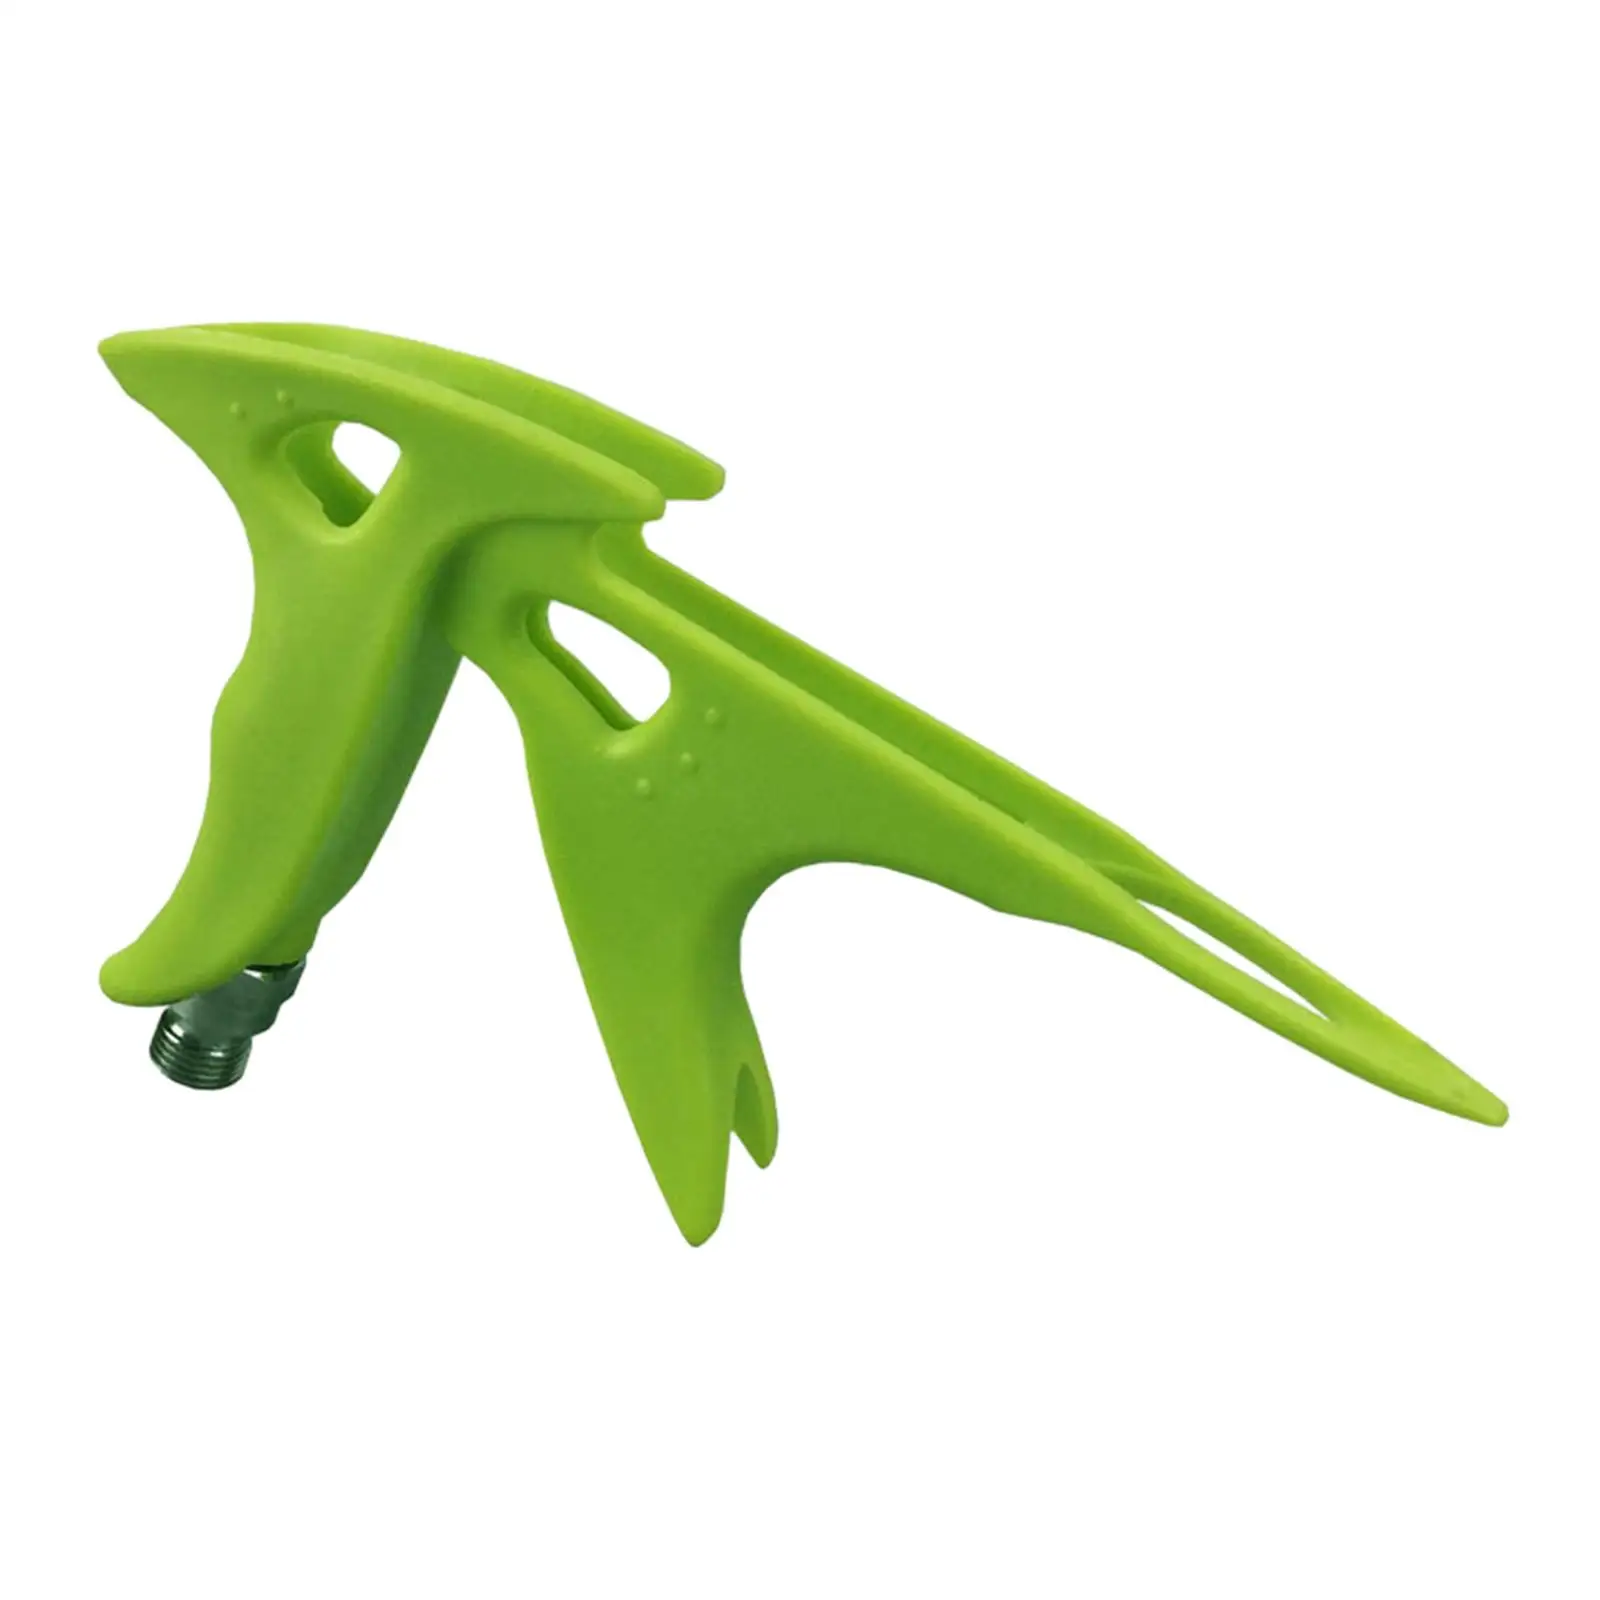 Air Brush Grip Stand Air Brush Grip Holder Practical Universal with Nut Fastening Spray Tool Holder Airbrush Holder